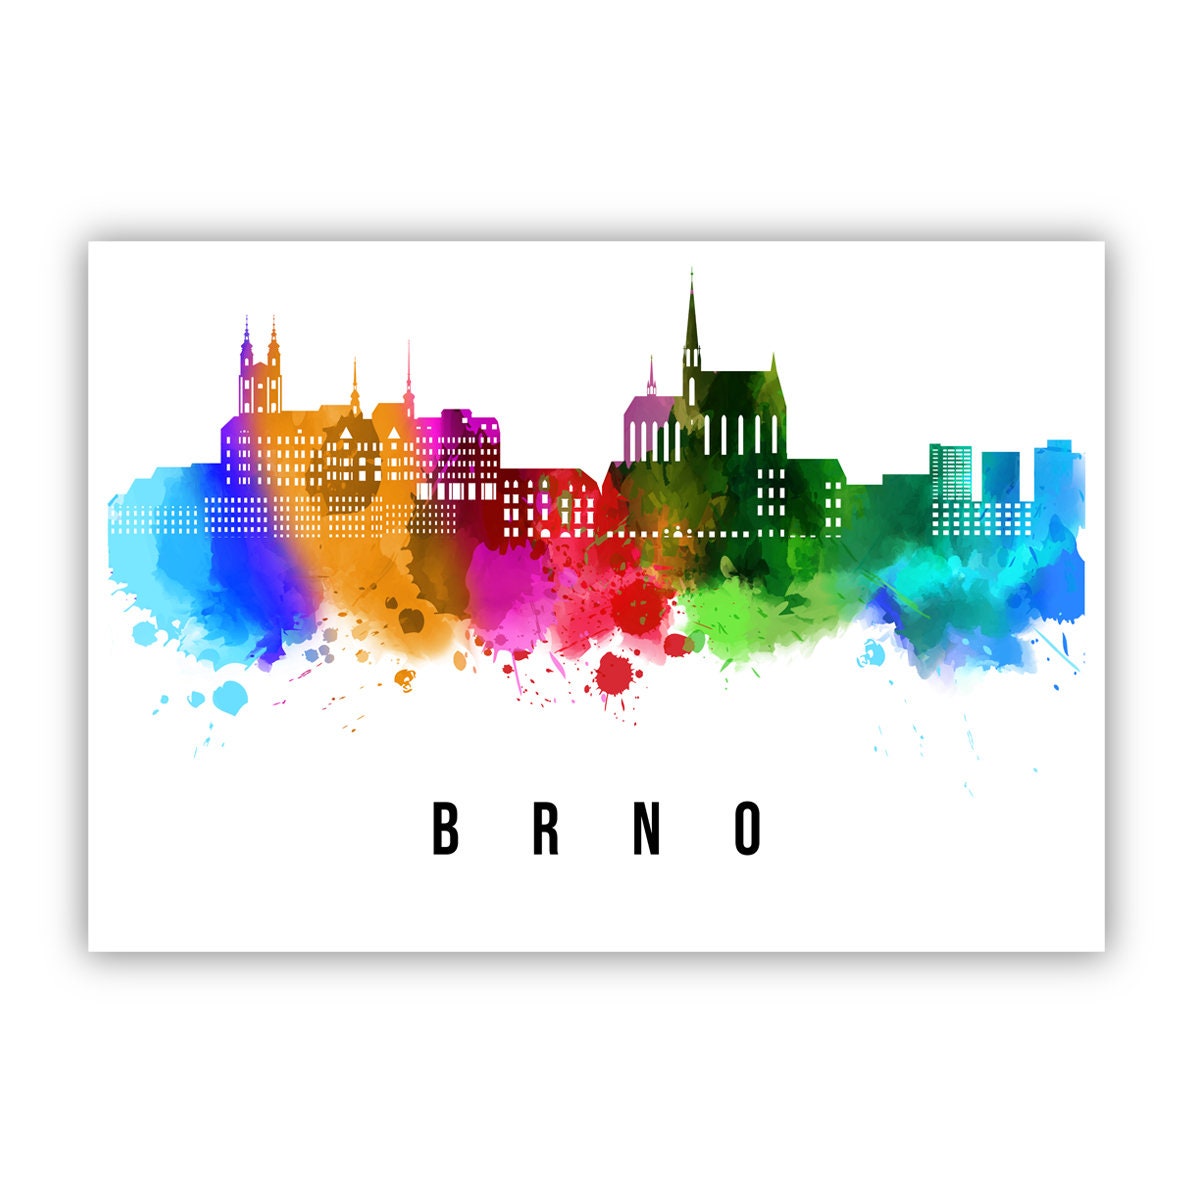 BRNO Czech Republic Poster, Skyline poster cityscape poster, Landmark Brno City Illustration poster, Home wall art, Office wall decoration